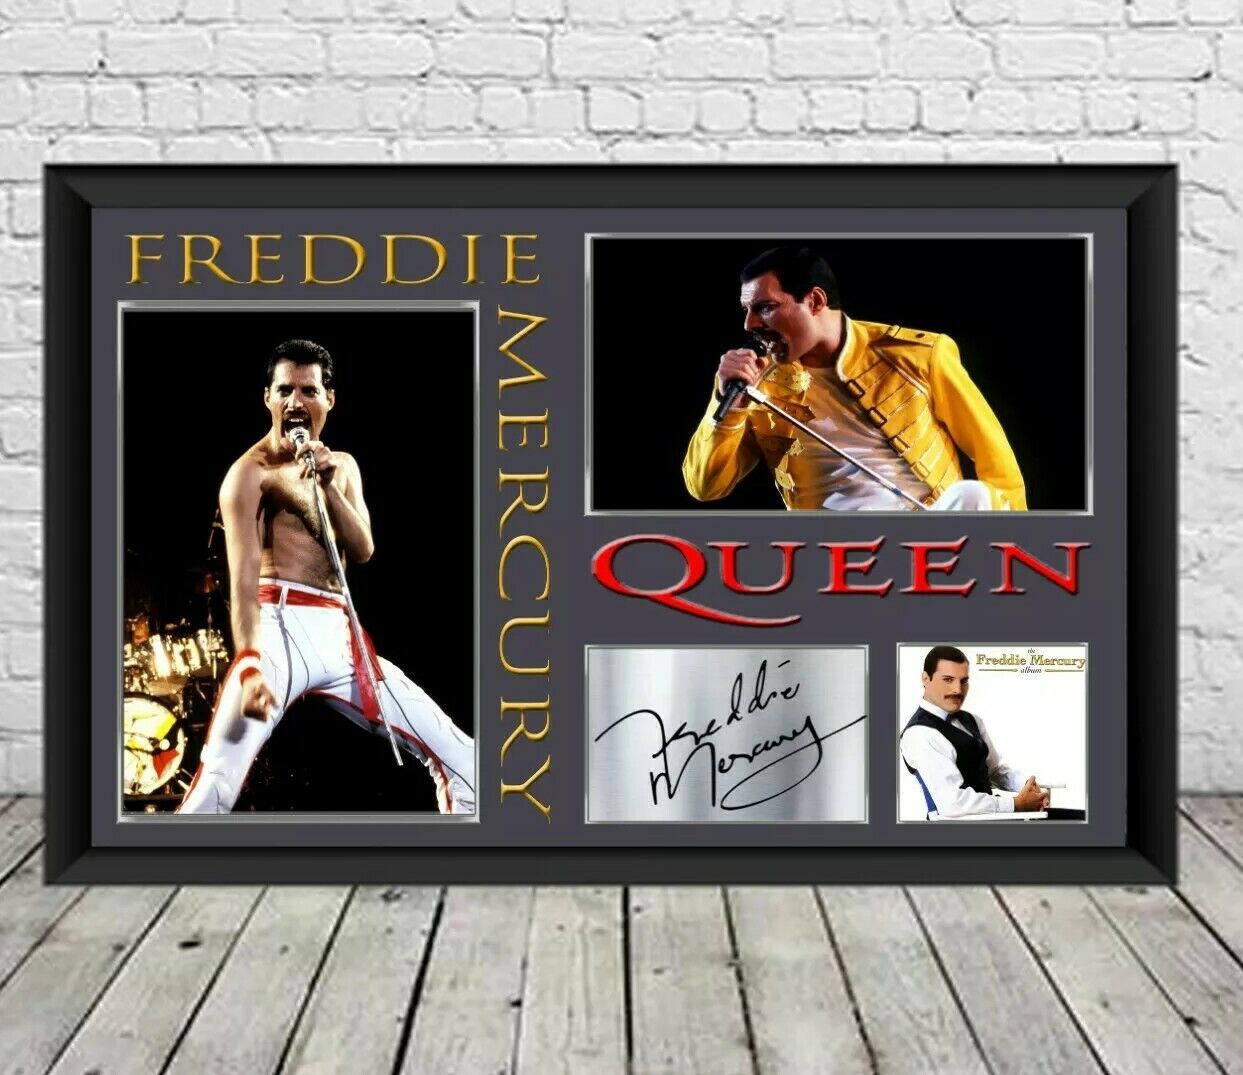 Queen Freddie Mercury Autographed Signed Photo Print Poster Memorabilia